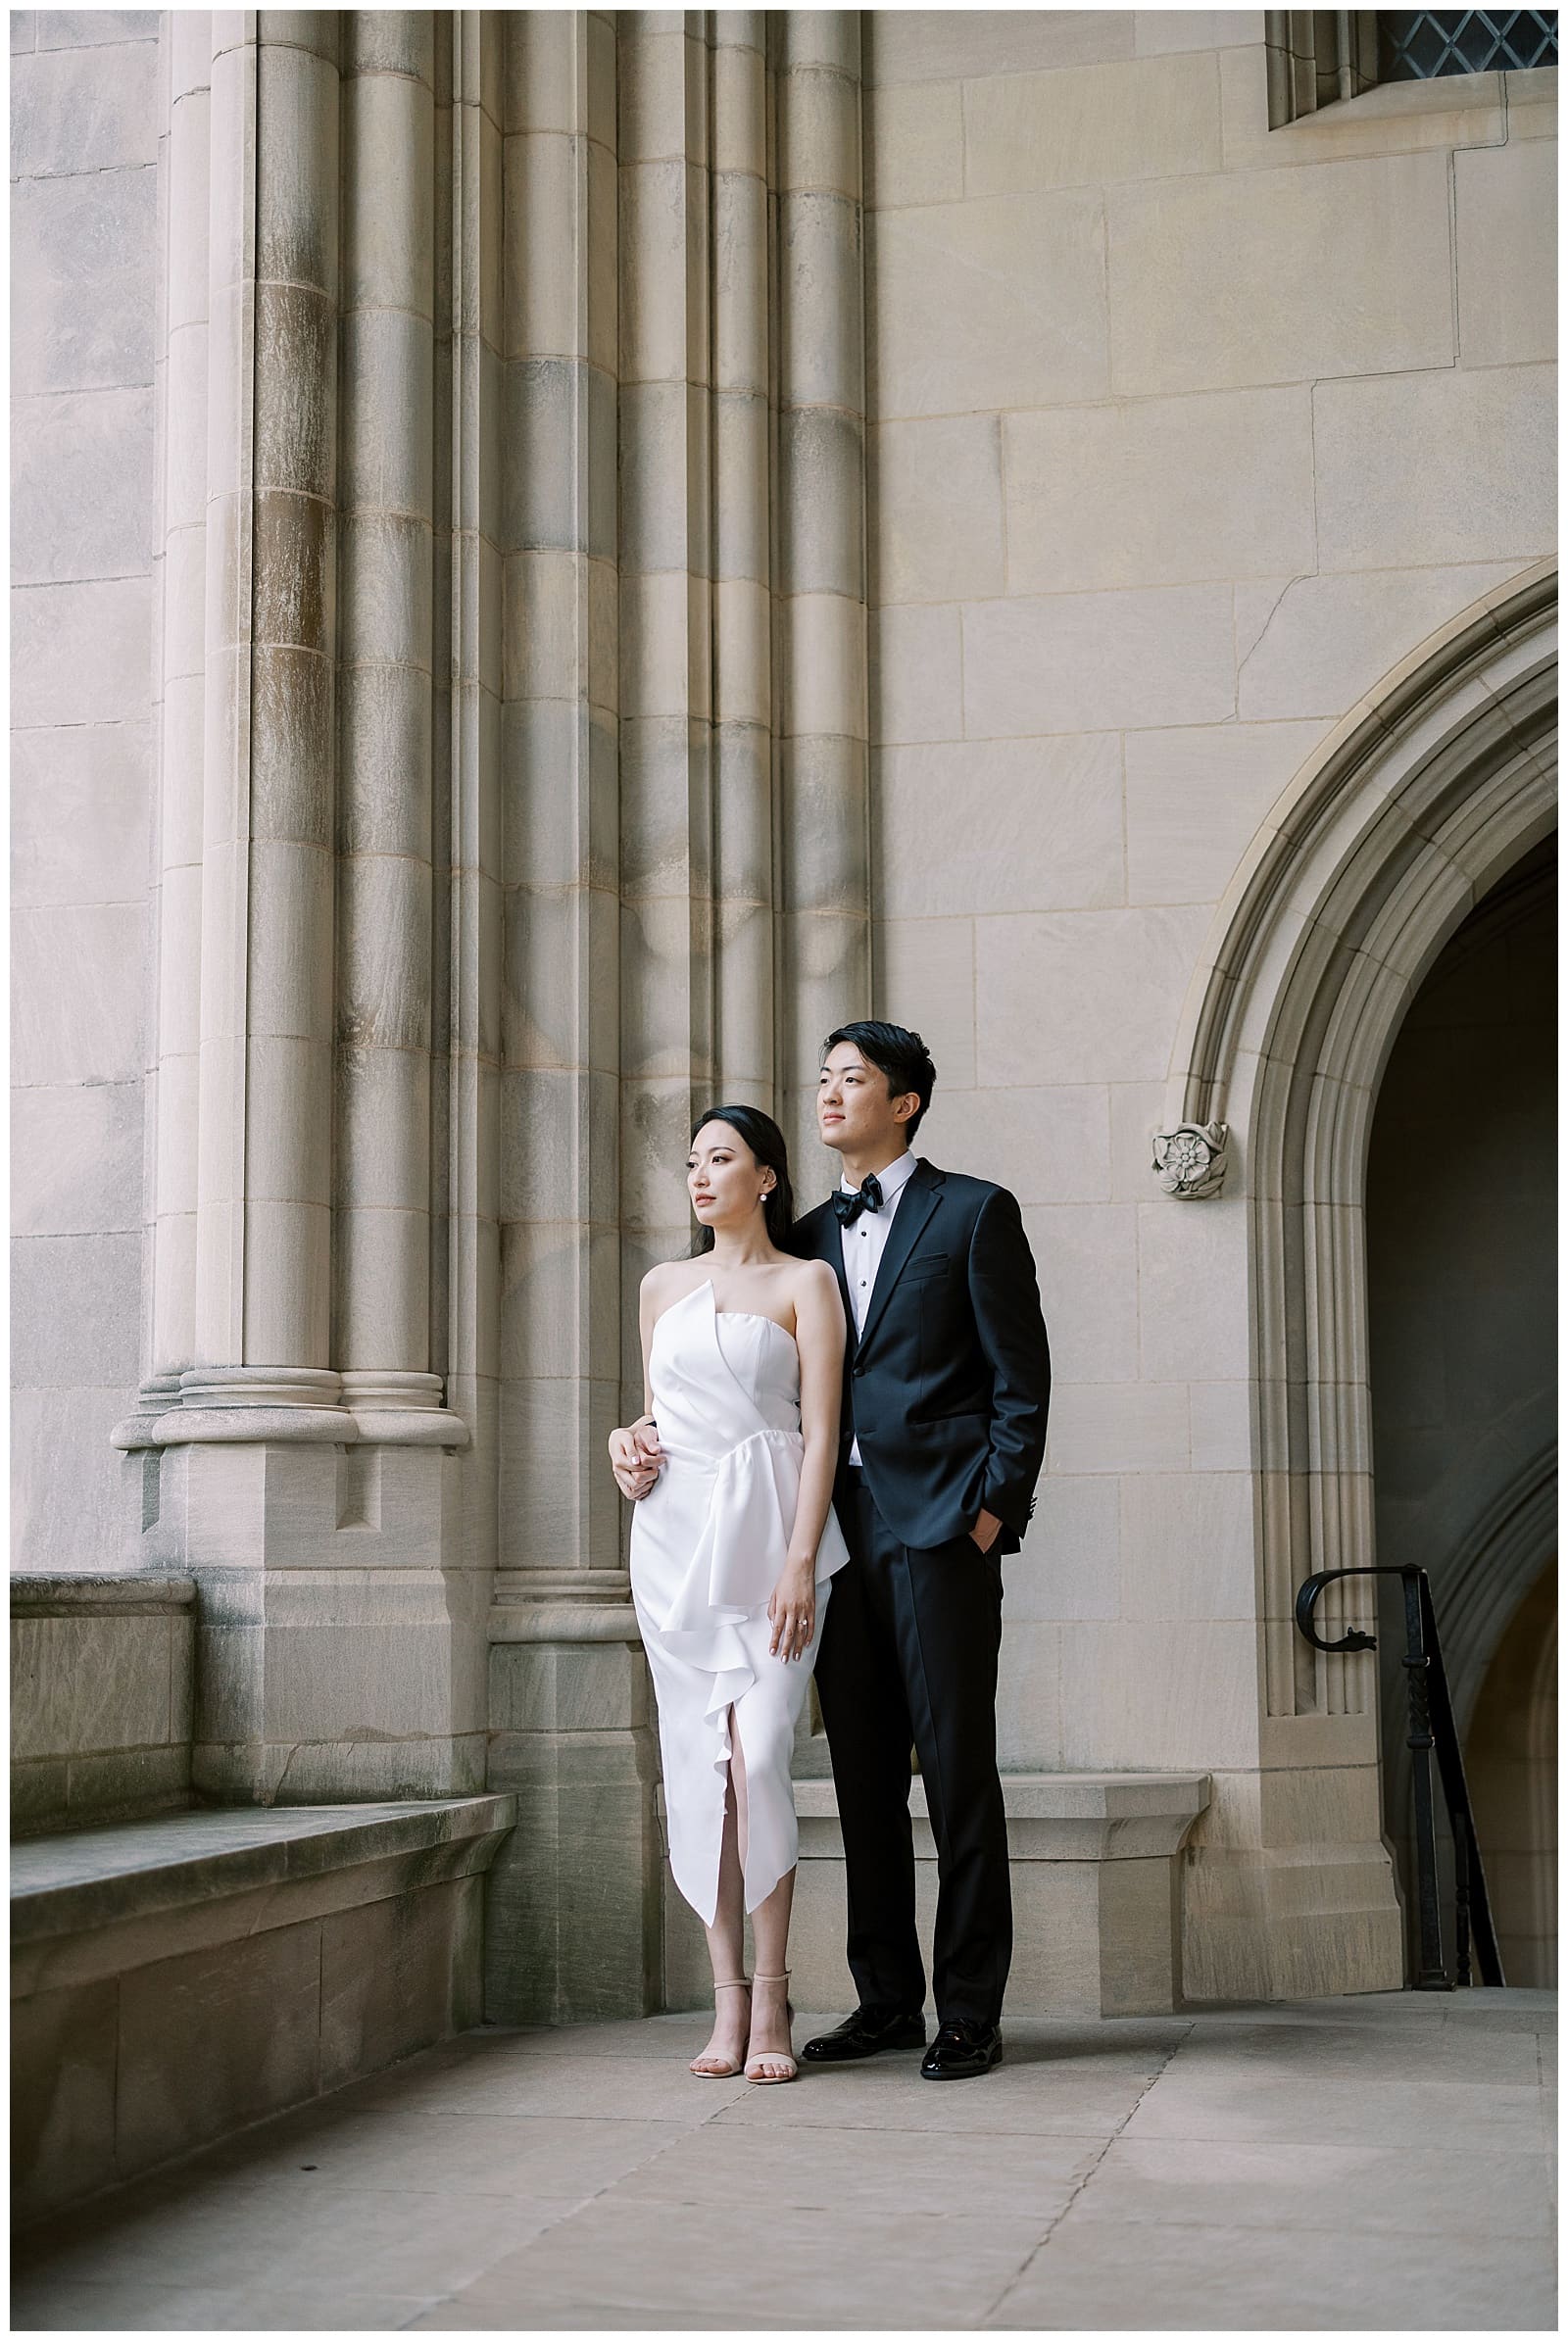 Danielle-Defayette-Photography-Washington-National-Cathedral-Engagement-Photos_0008.jpg